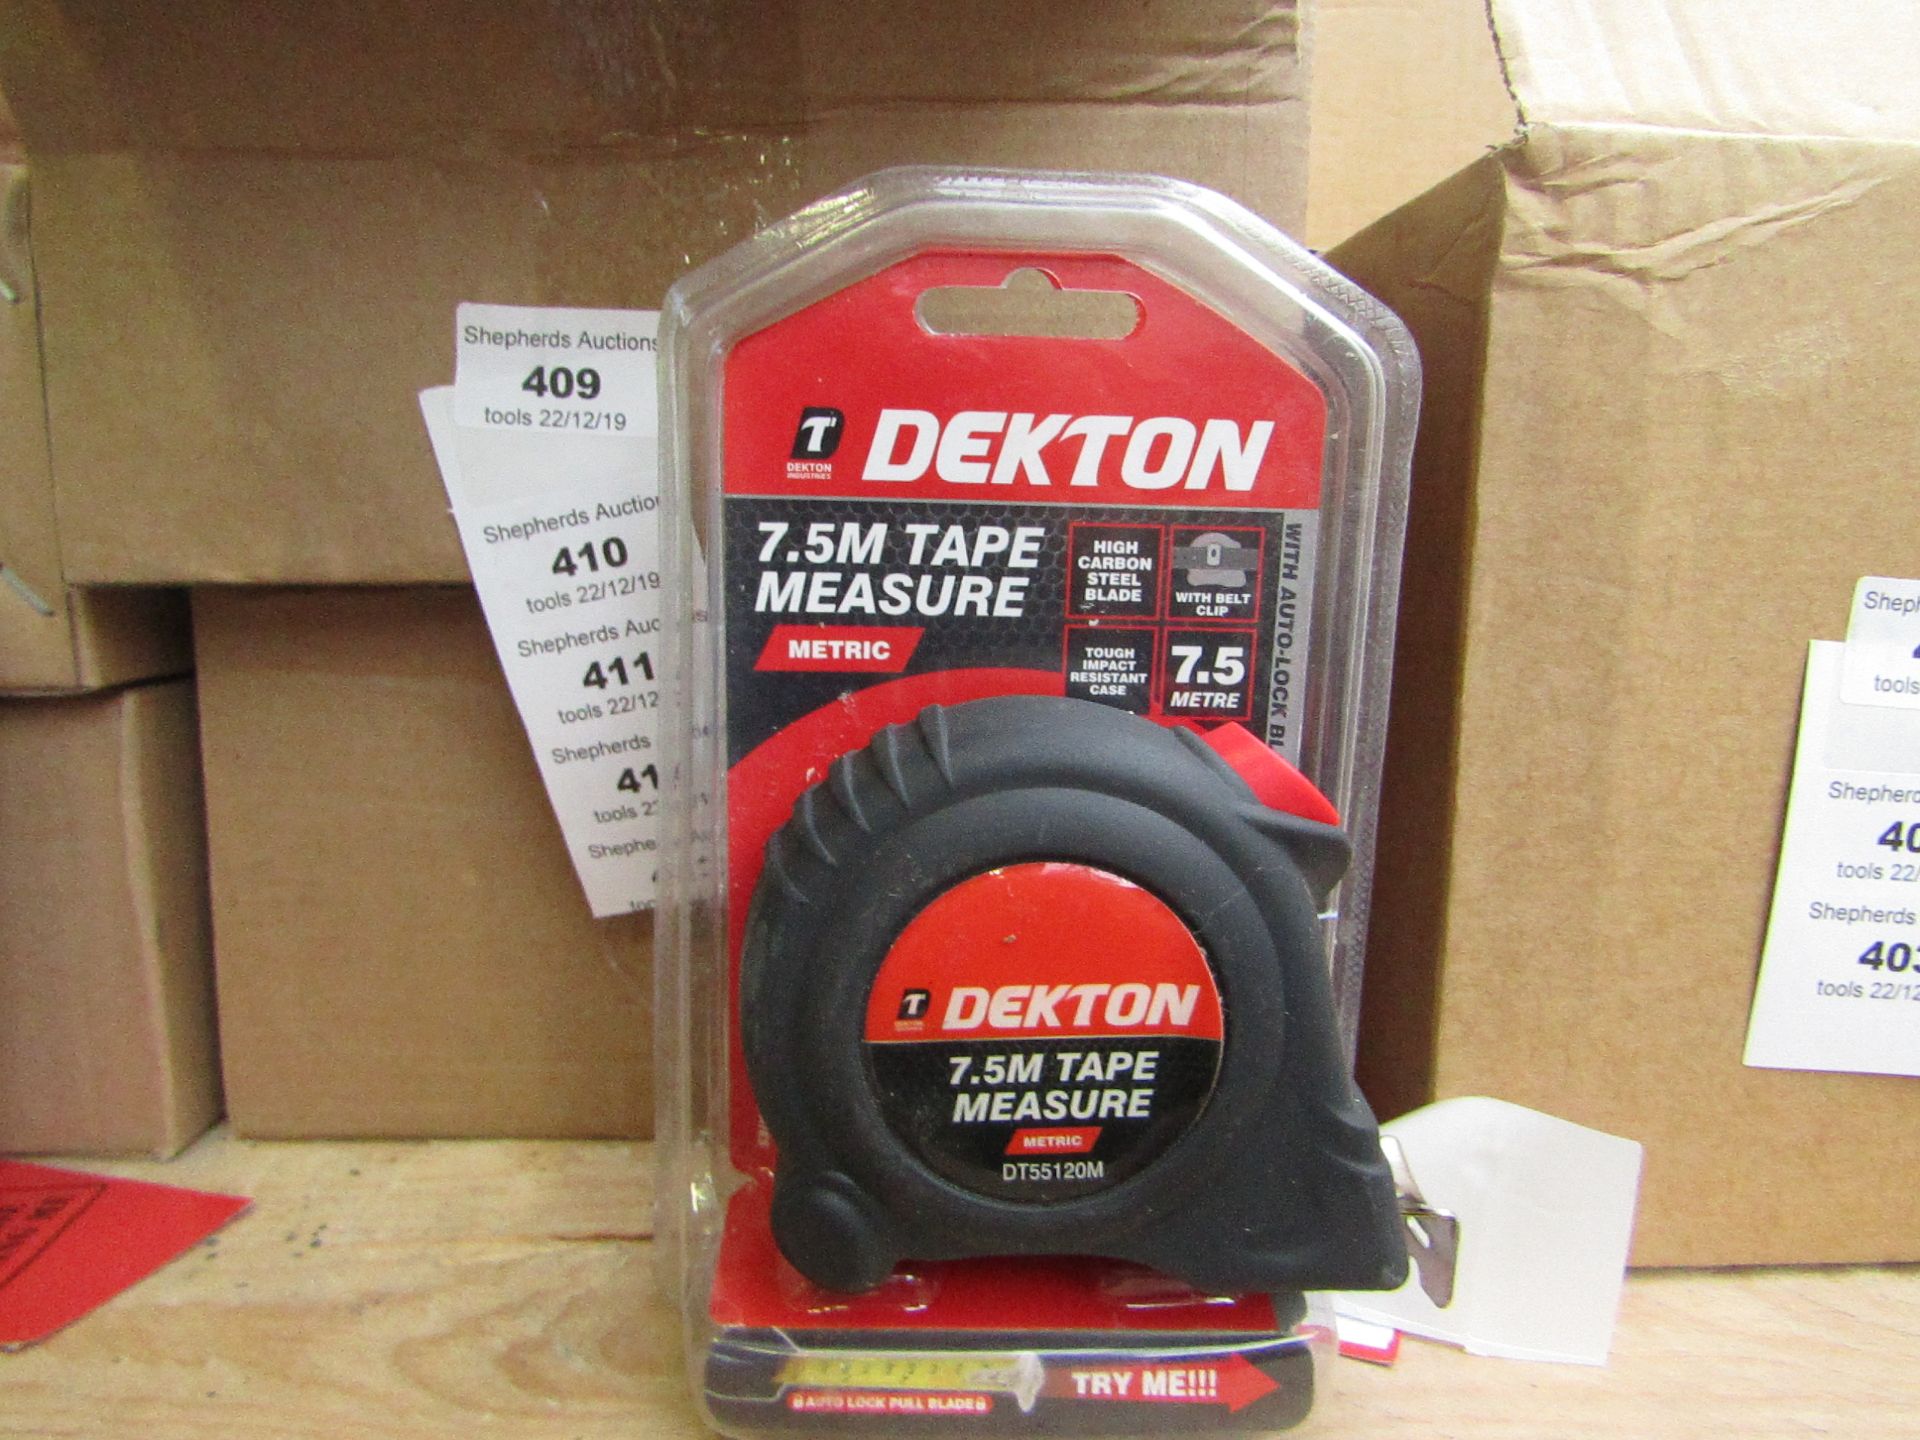 Dekton 7.5Mtr tape measure, new